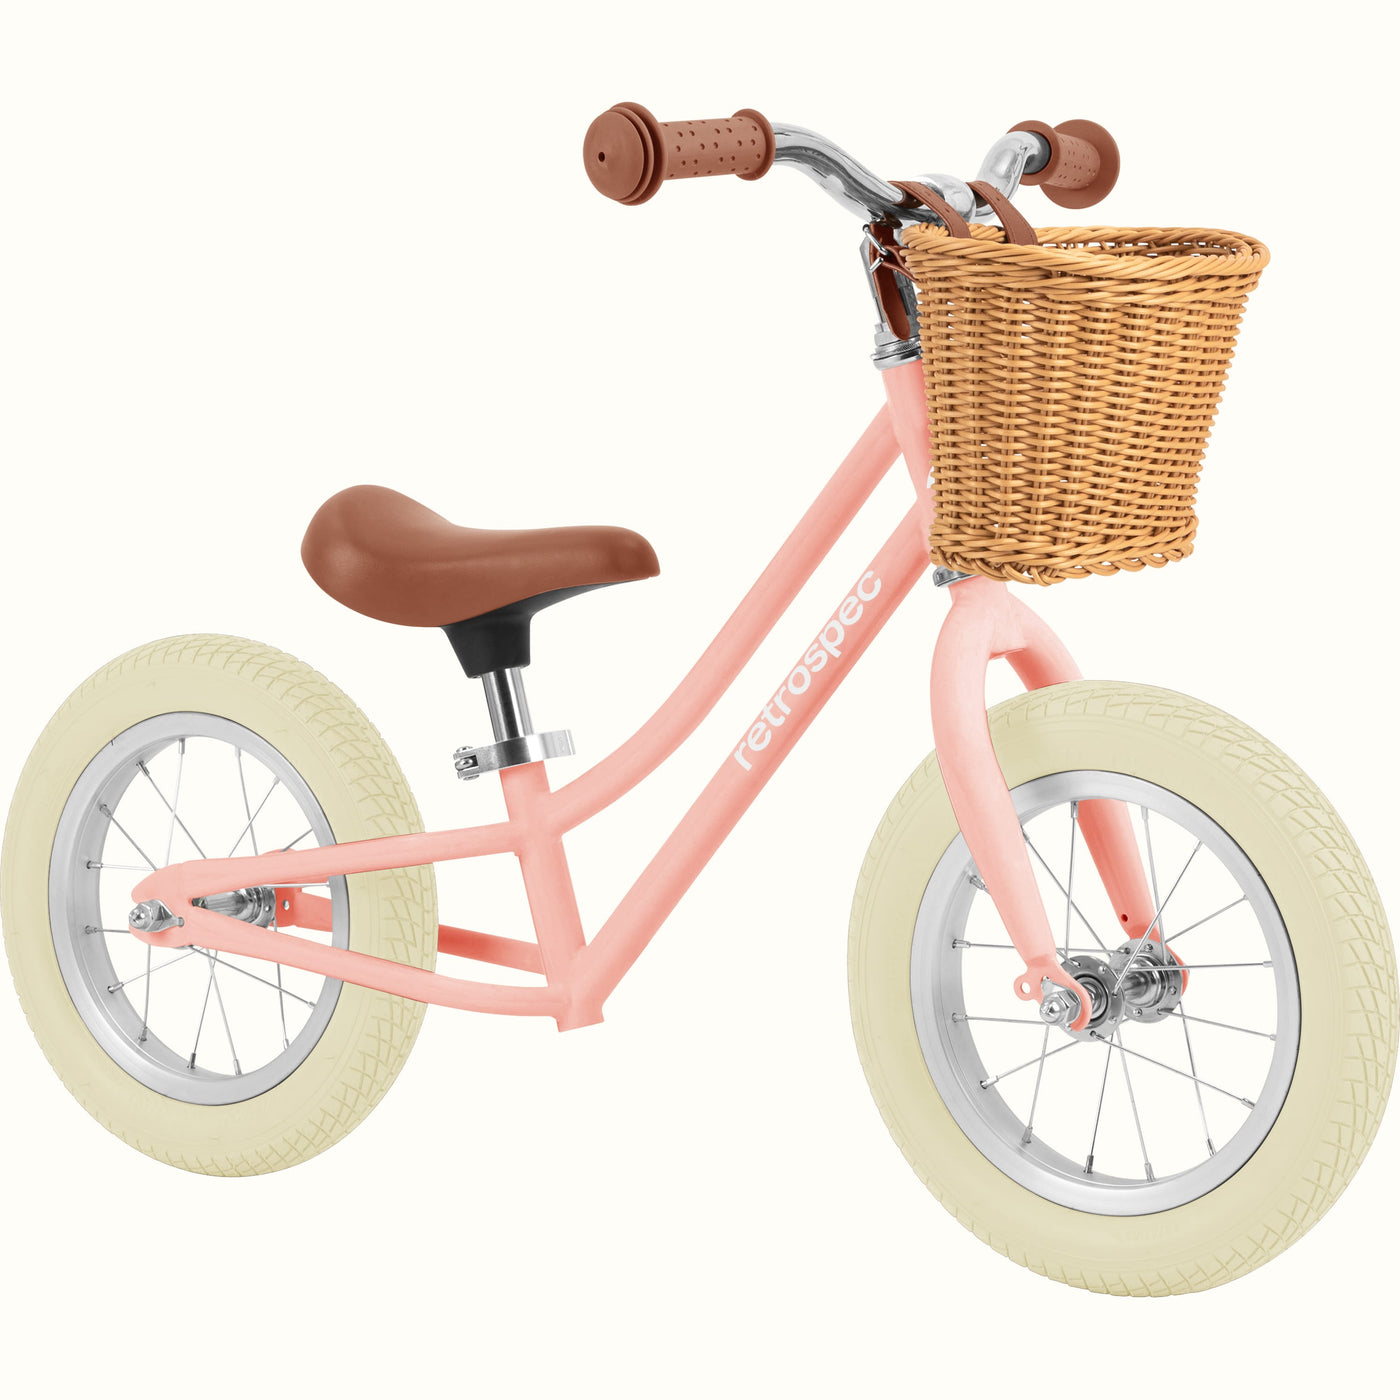 Baby Beaumont Balance Bike (2-3yrs) | Blush